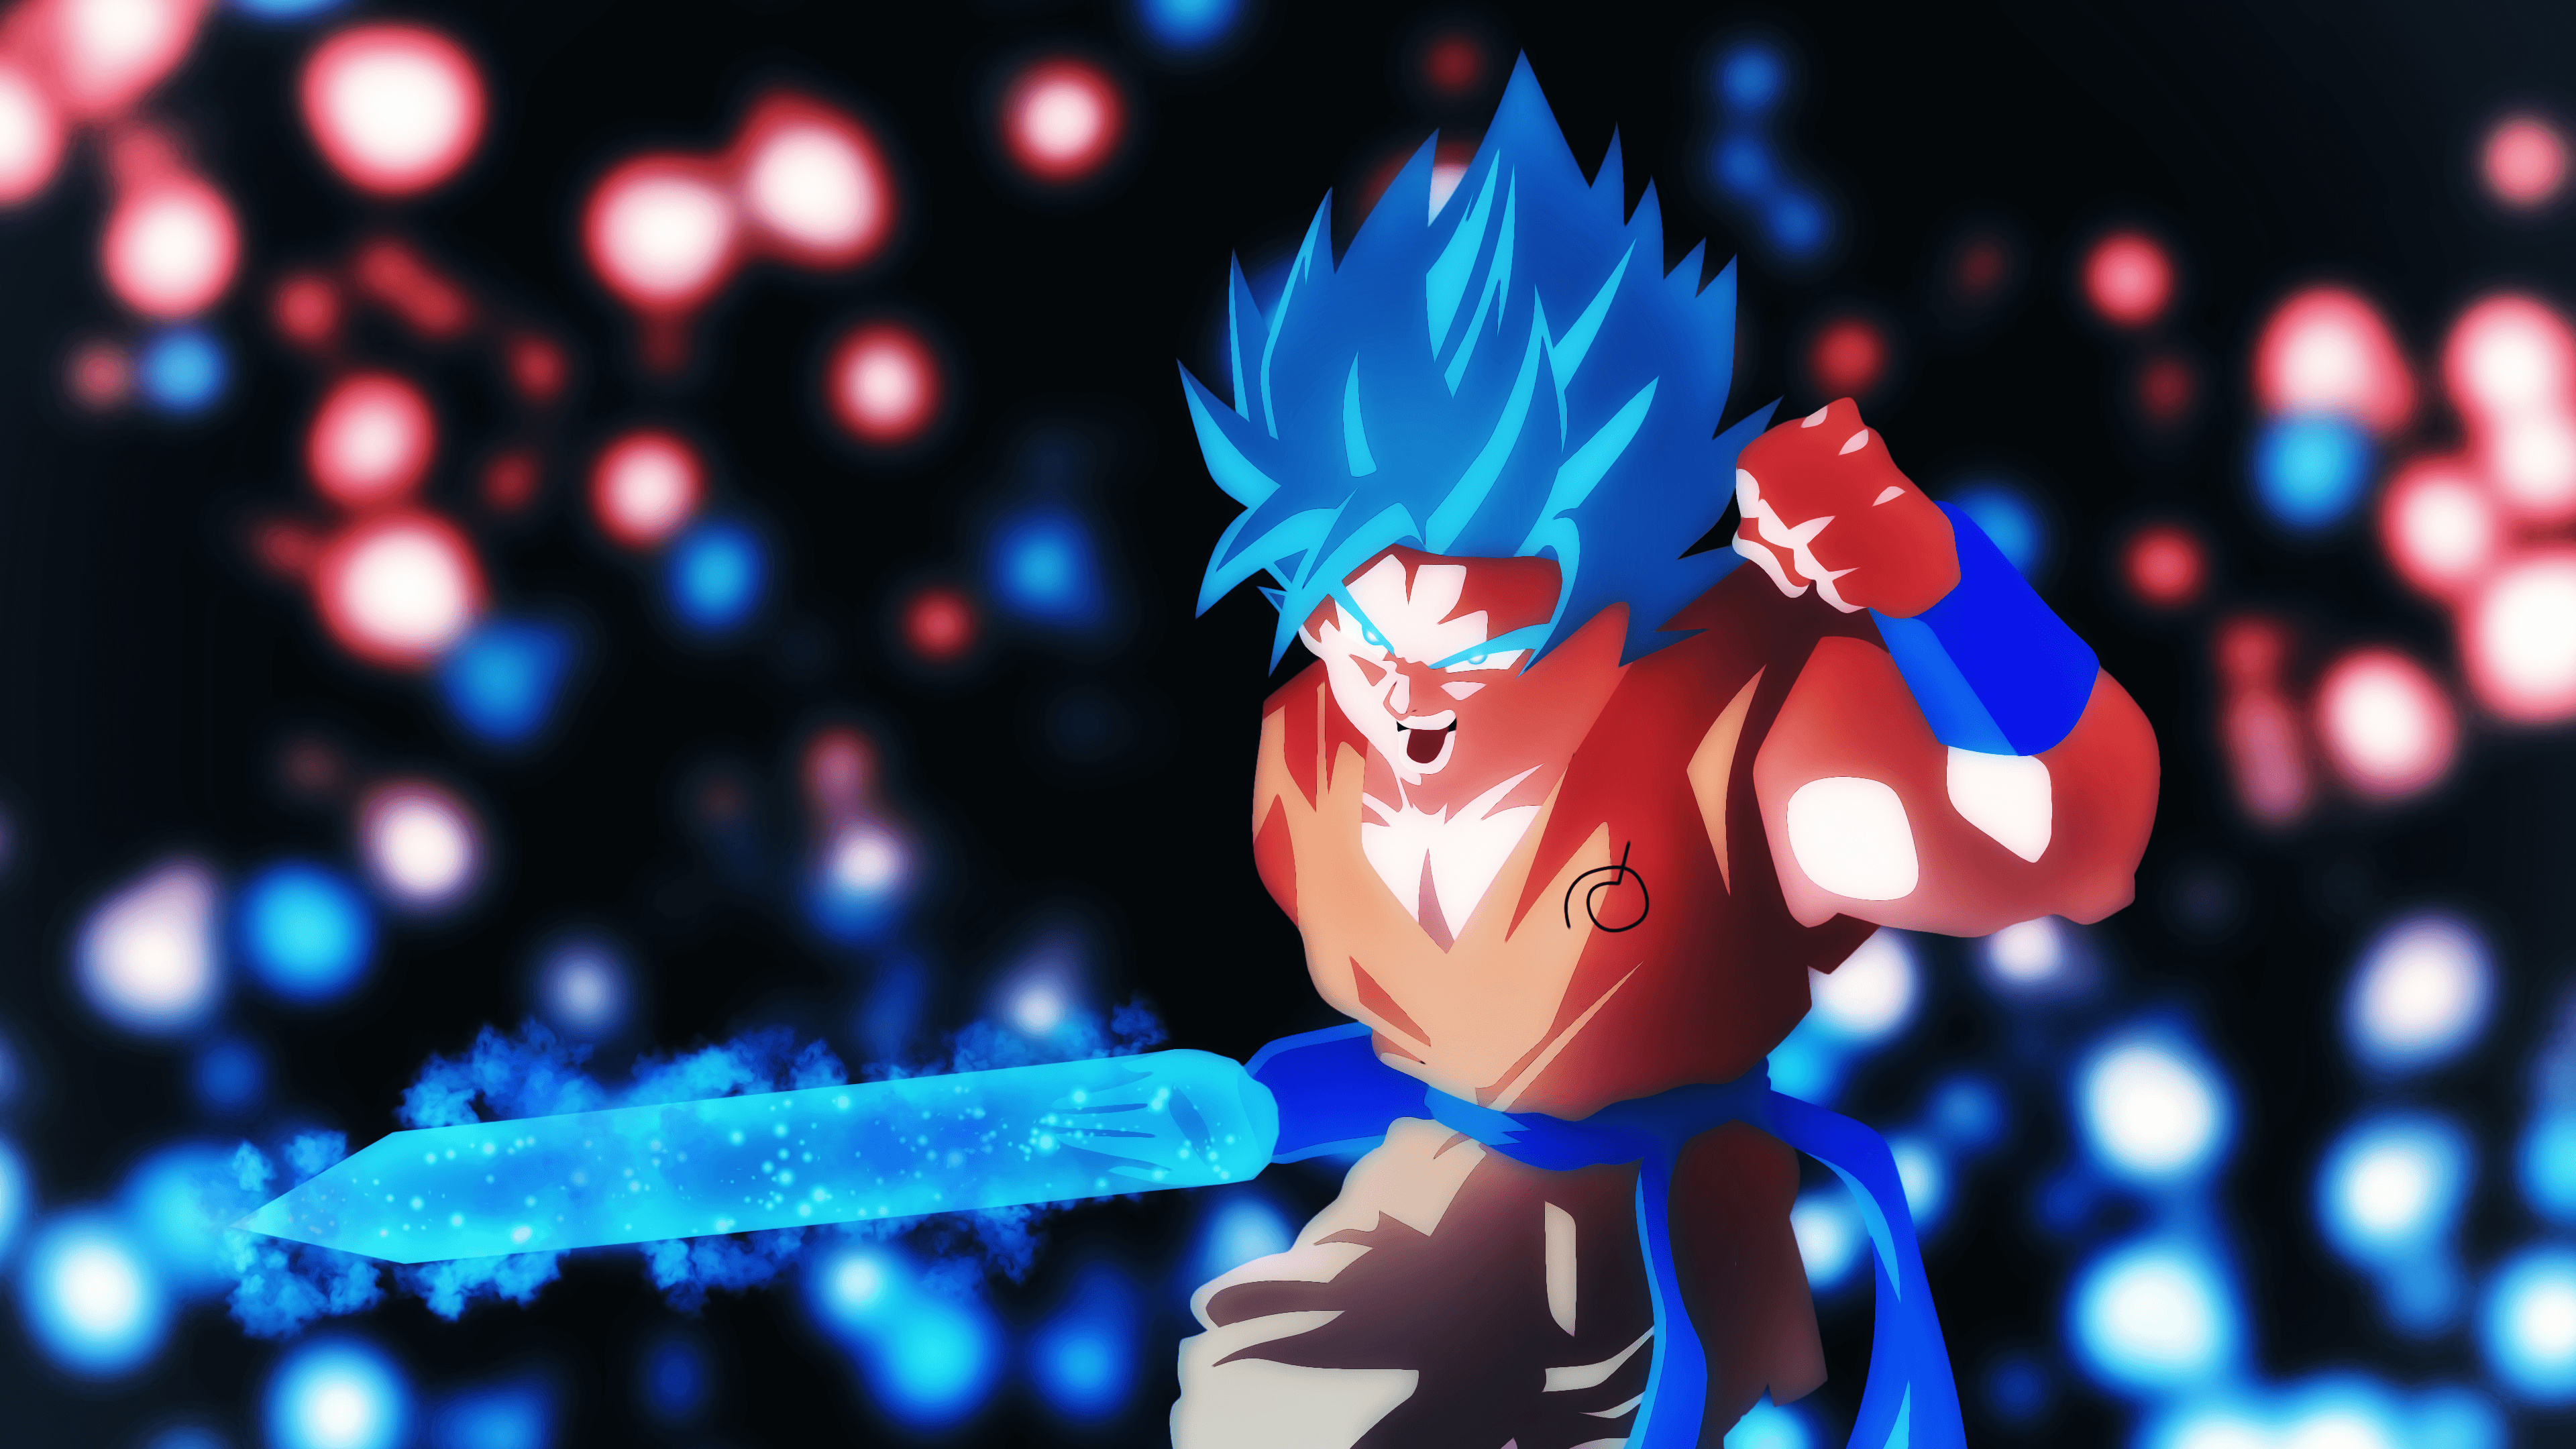 Goku SSB Ki Blade 4k Ultra HD Wallpaper. Background Image